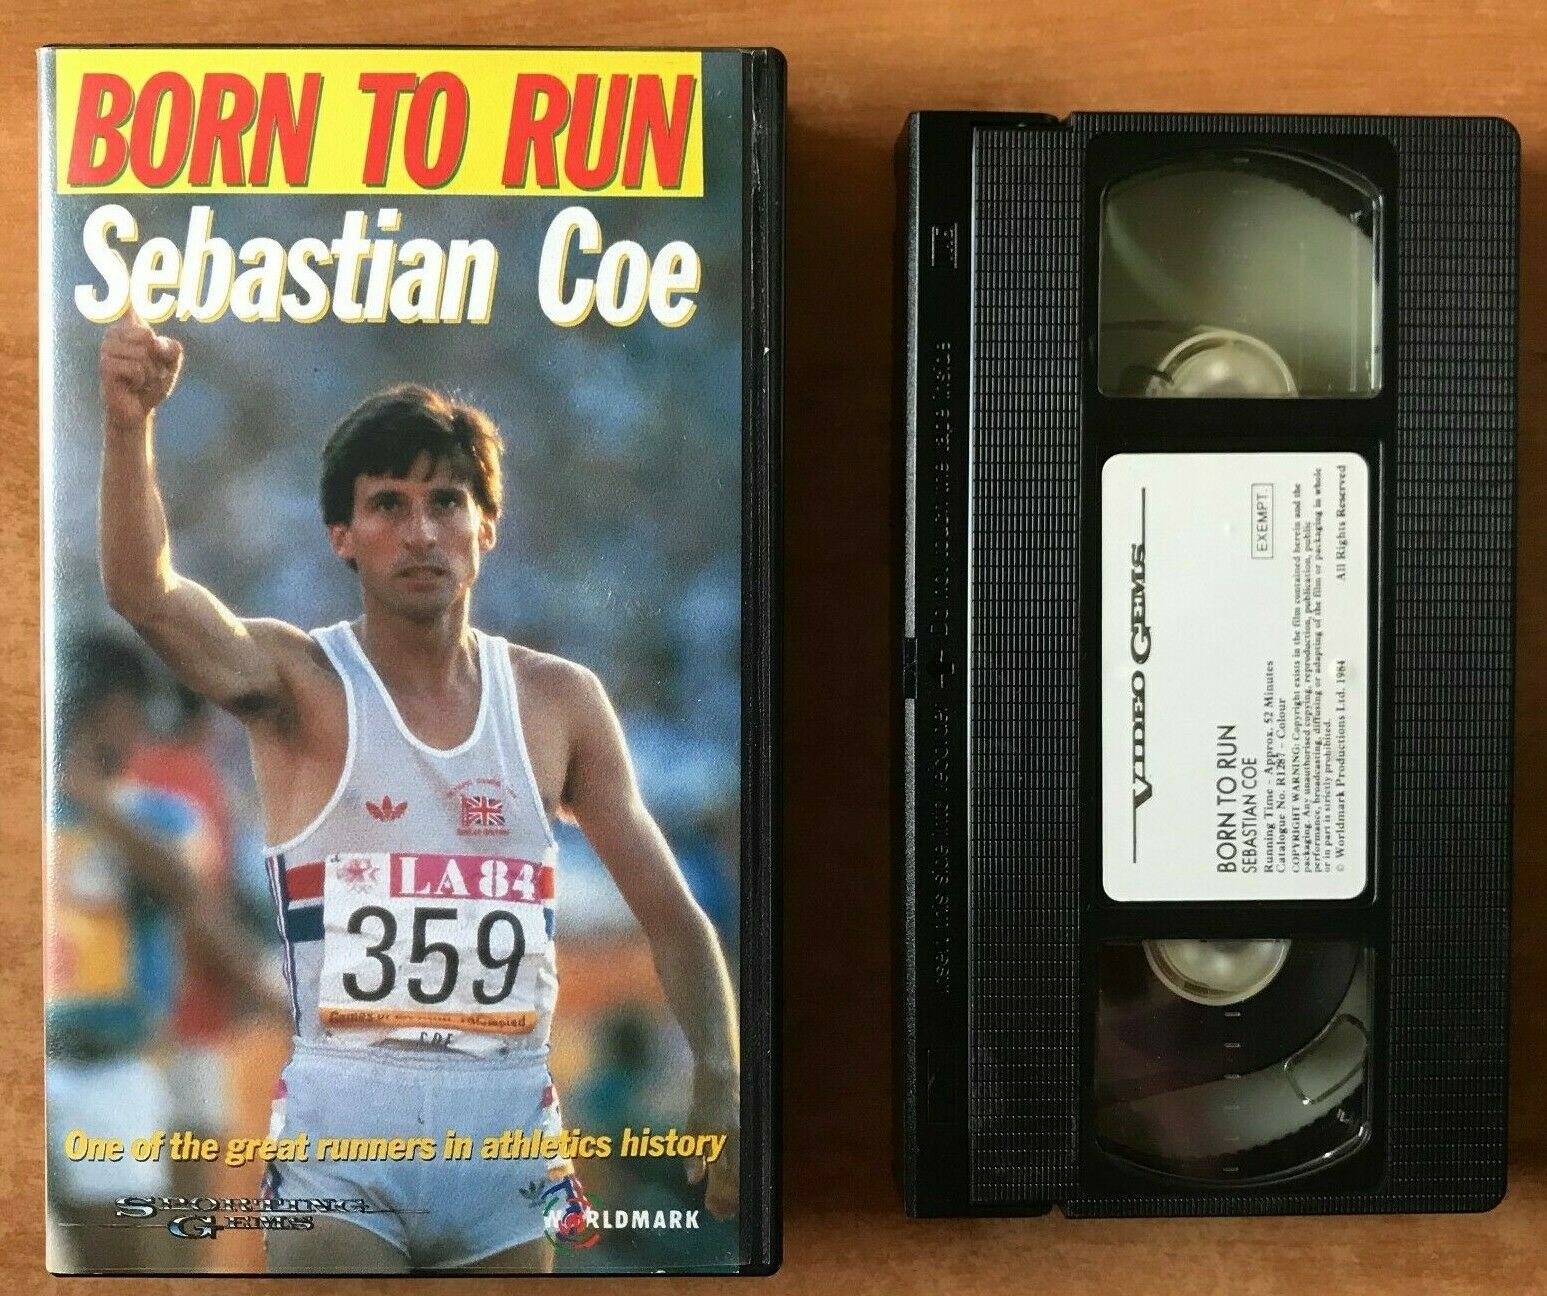 Sebastian Coe: Born To Run [Sporting Gems] British Athlete - Documentary - VHS-